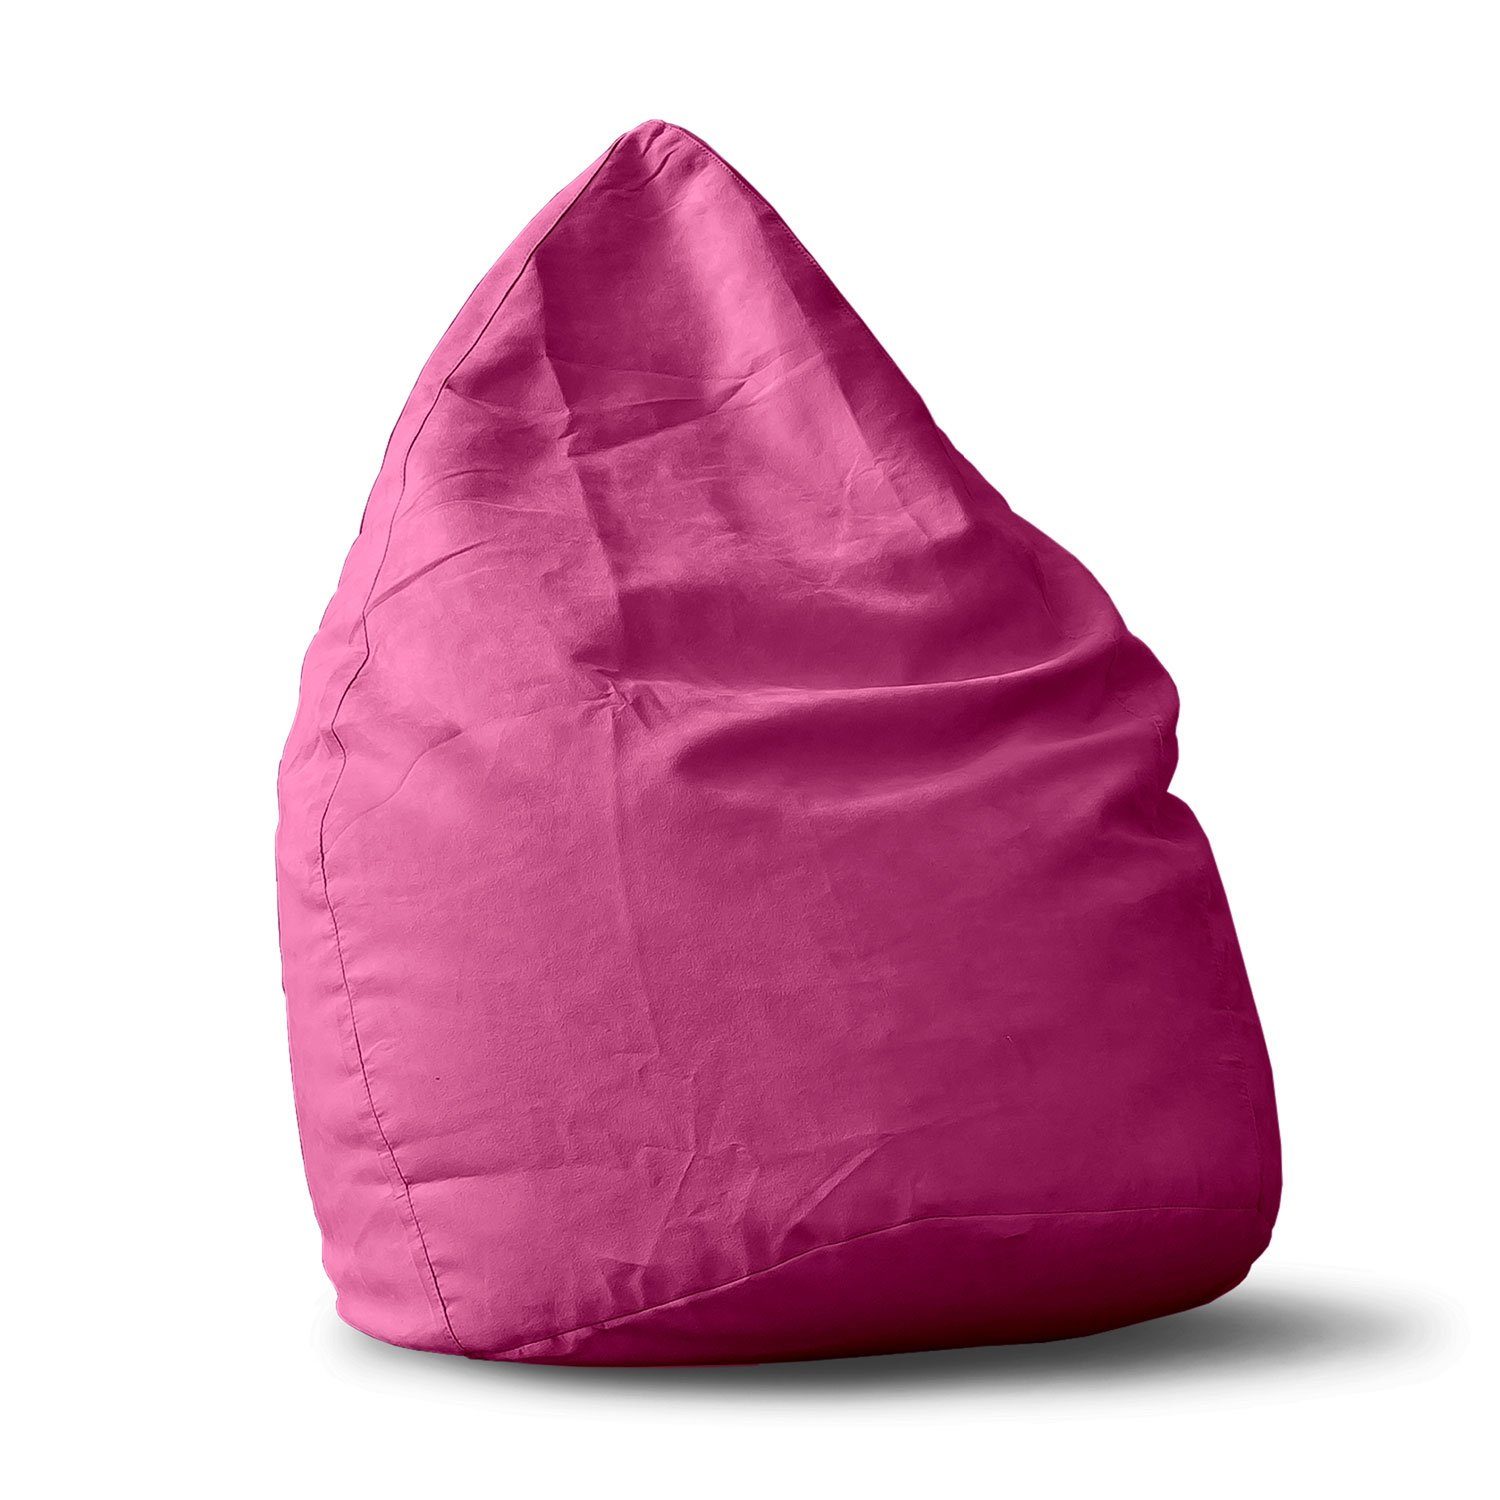 Lumaland Sitzsack Luxury XL waschbar Bag Bodenkissen Bean weich 60x45cm, pink Sitzkissen robust 120L Microvelours